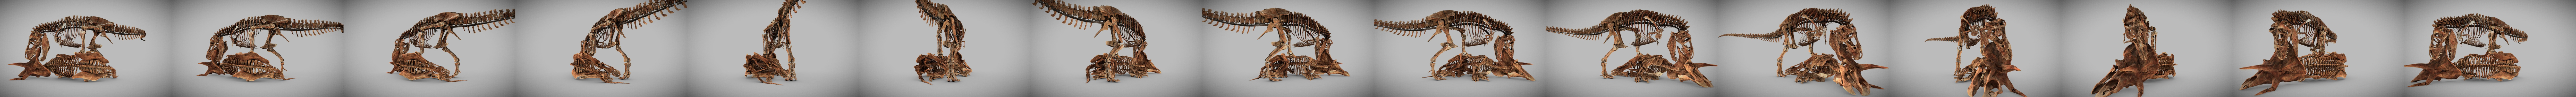 Tyrannosaurus Rex Triceratops Smithsoniandpo Download Free 3d Model By Thomas Flynn Nebulousflynn E9fa58a - roblox skeleton t rex code